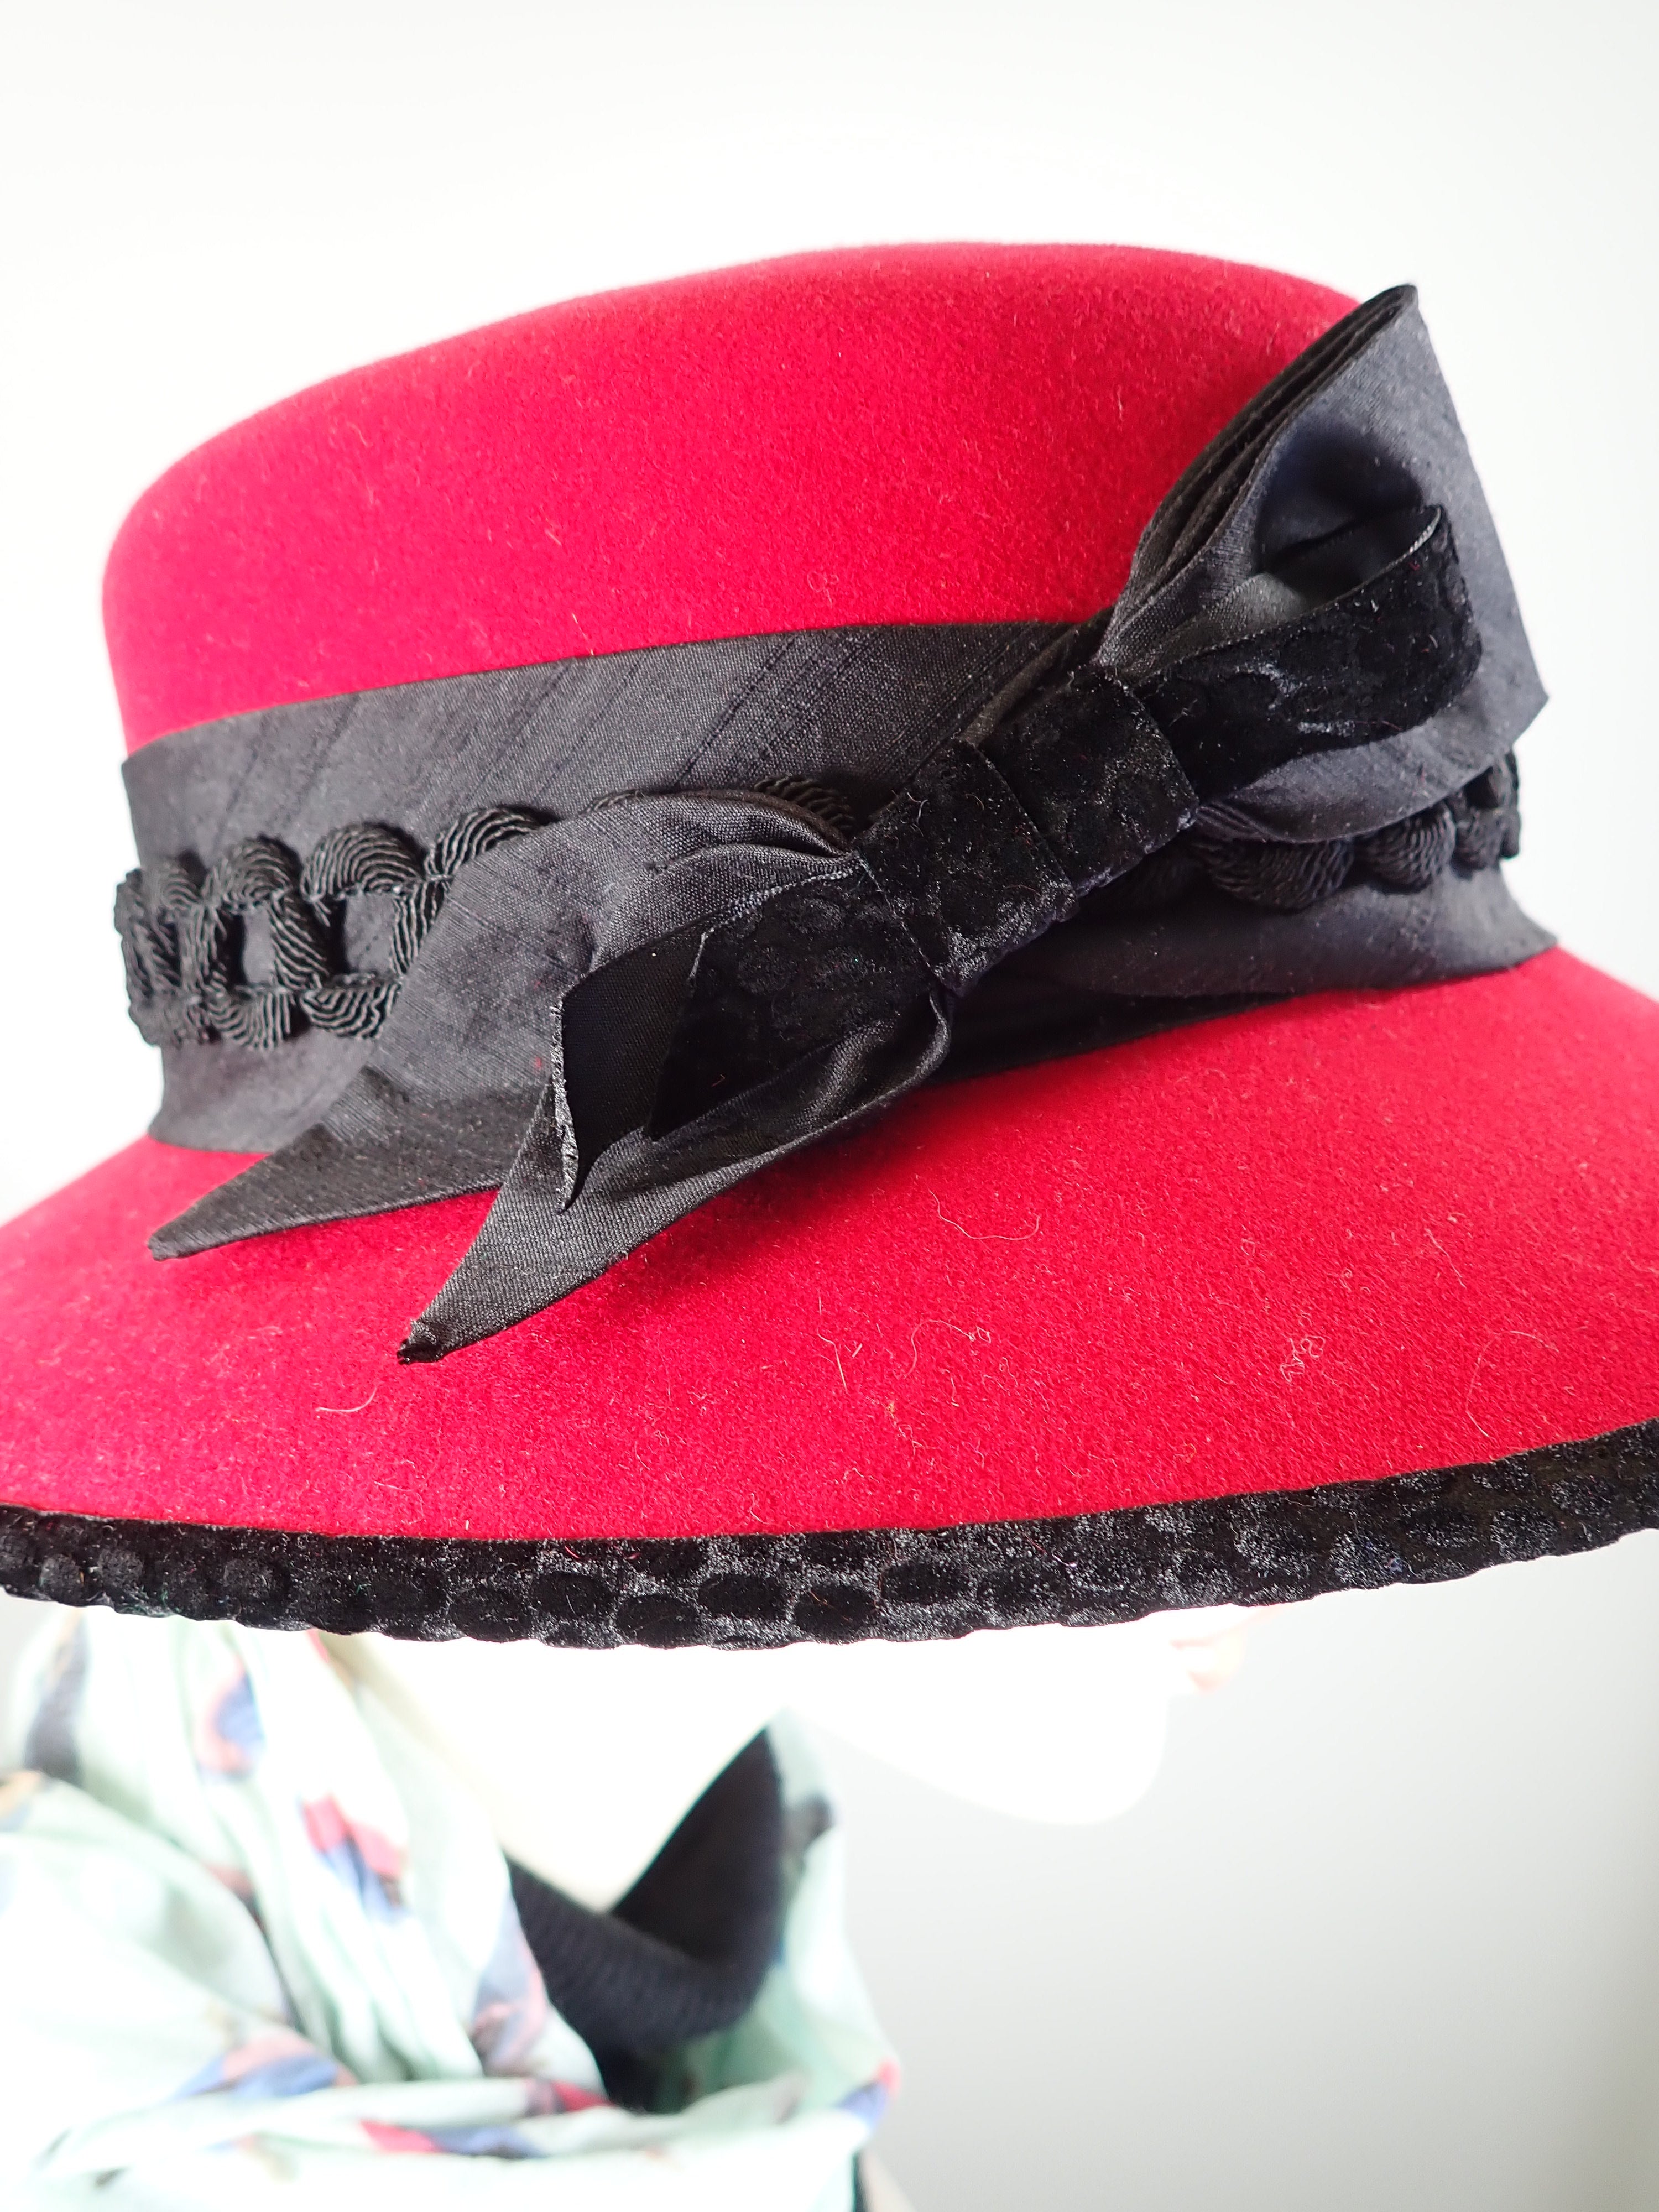 Womens Red Winter Felt Cloche Hat. 1920s Style Black and Red Miss Fisher Hat. Womens Warm Winter Hat. Queen Elizabeth Hat